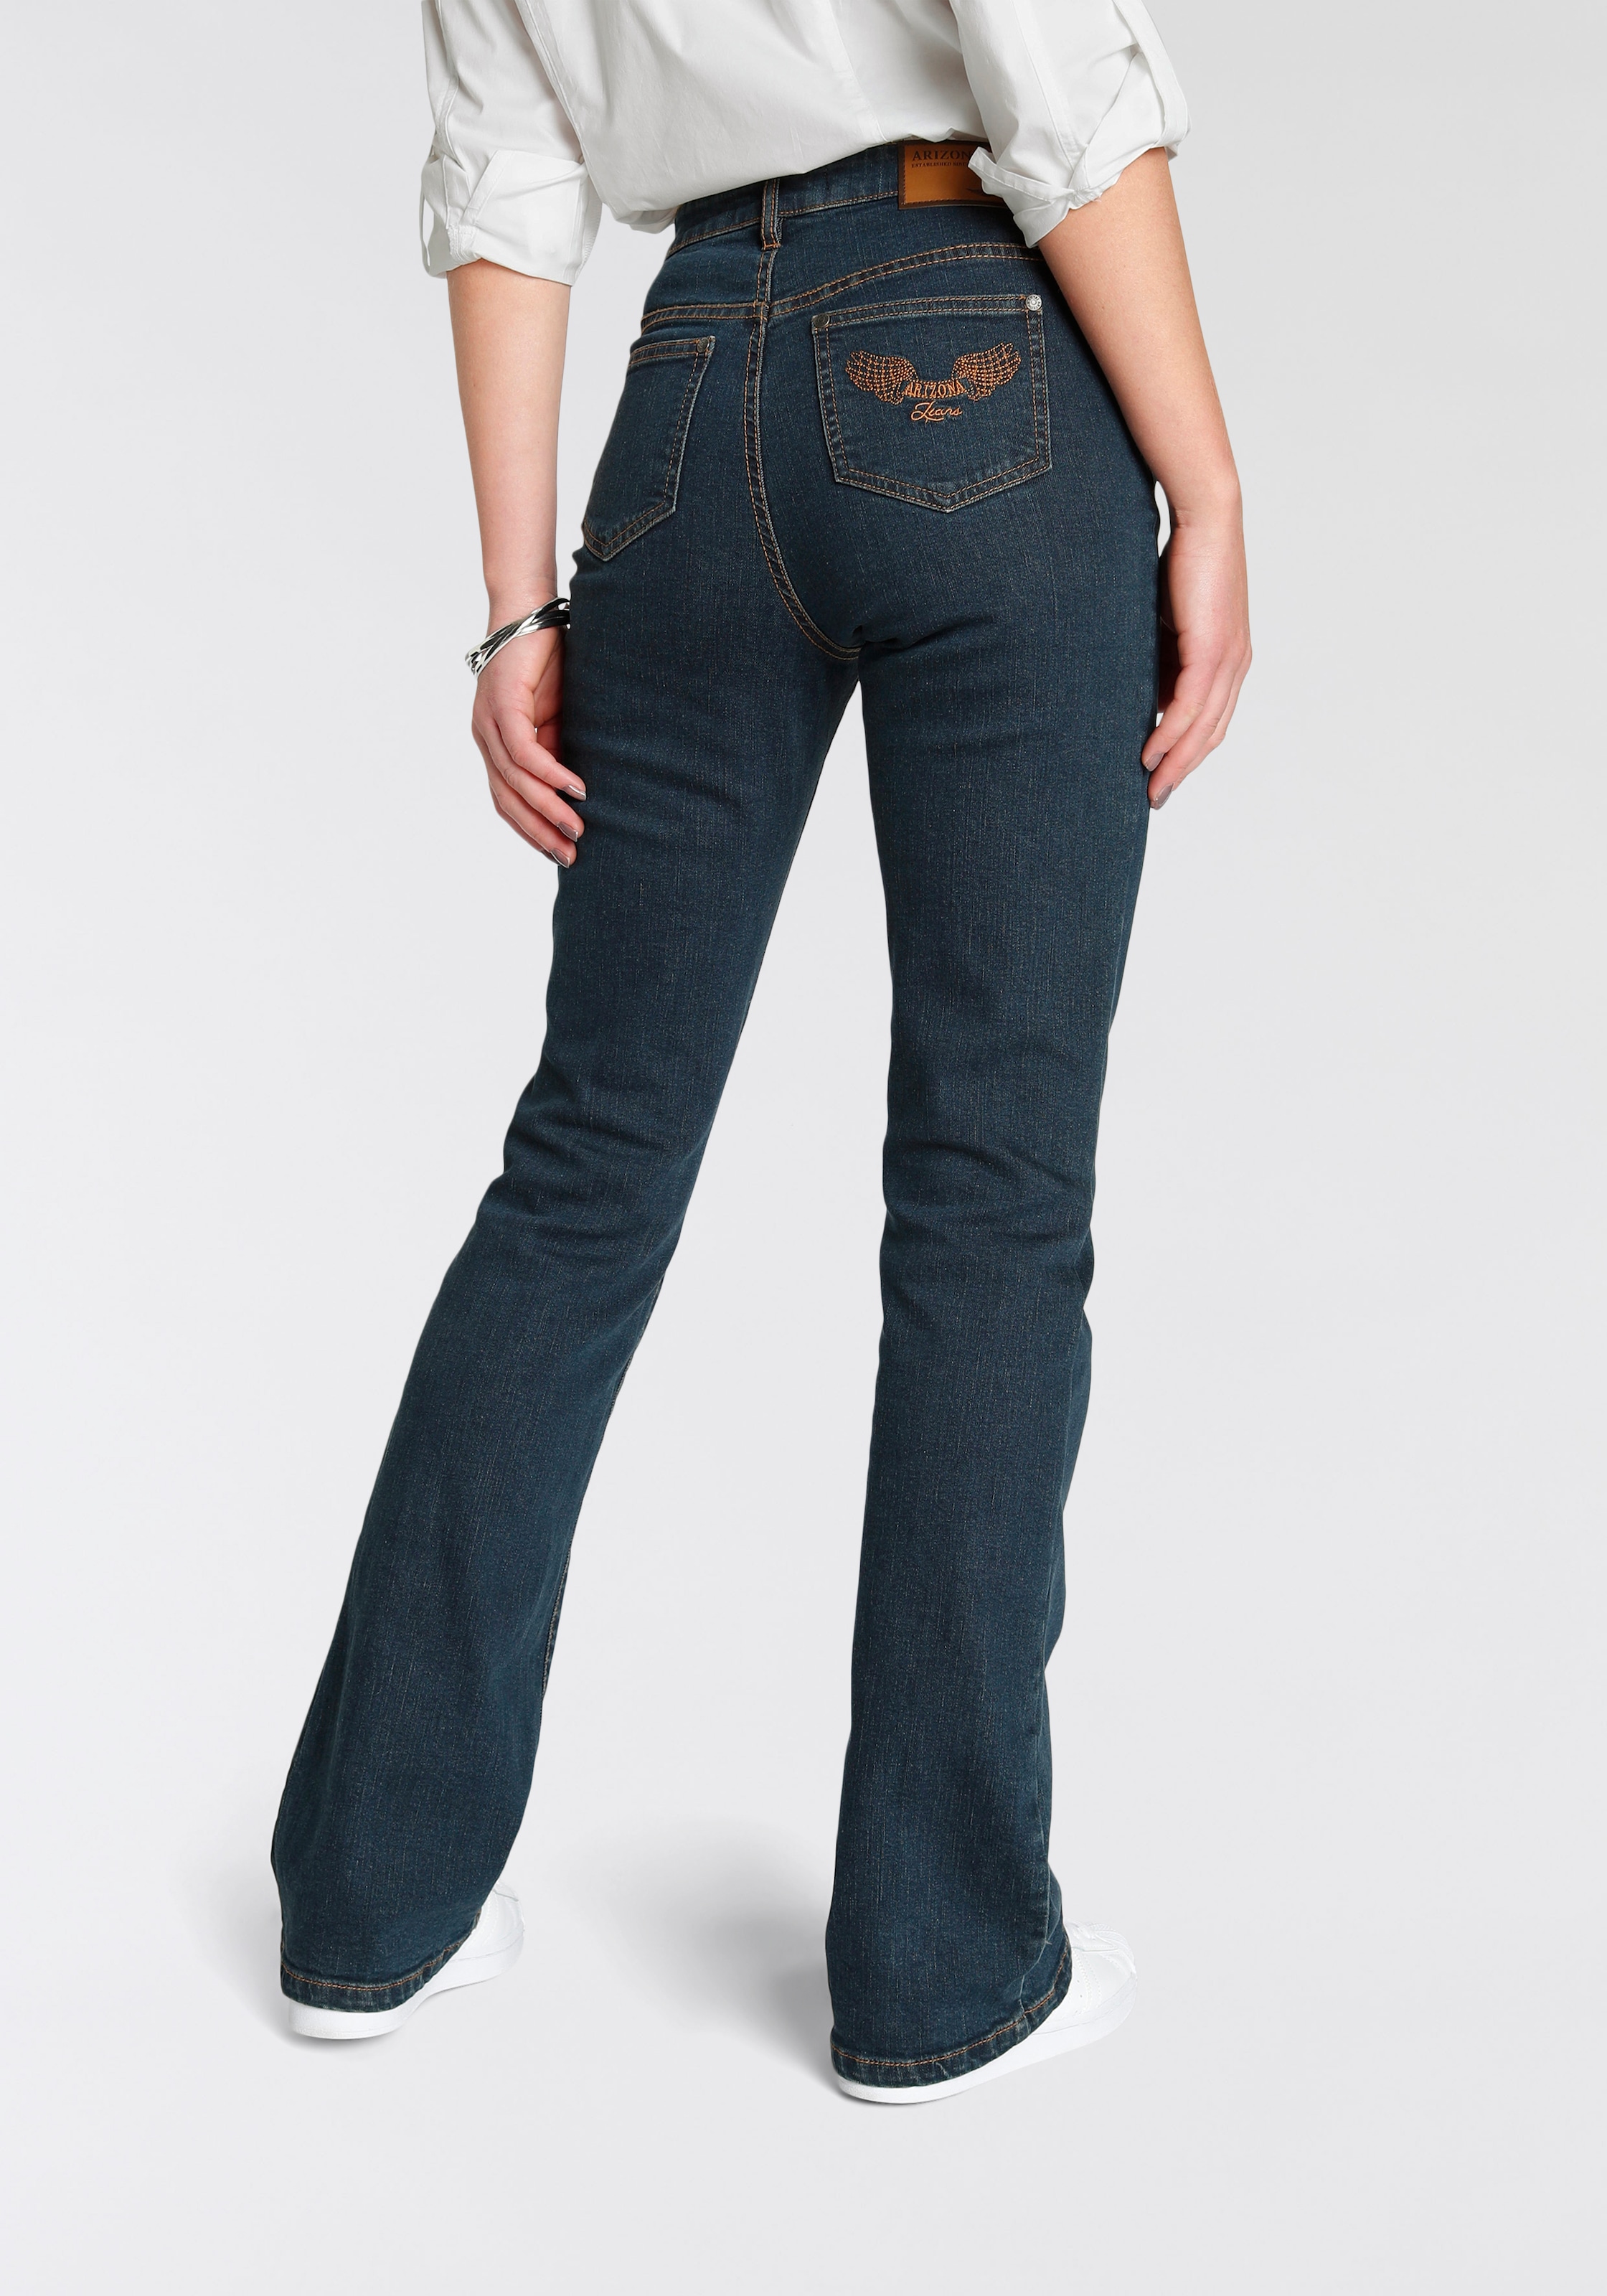 Arizona Bootcut-Jeans »Comfort-Fit«, High Waist kaufen | BAUR